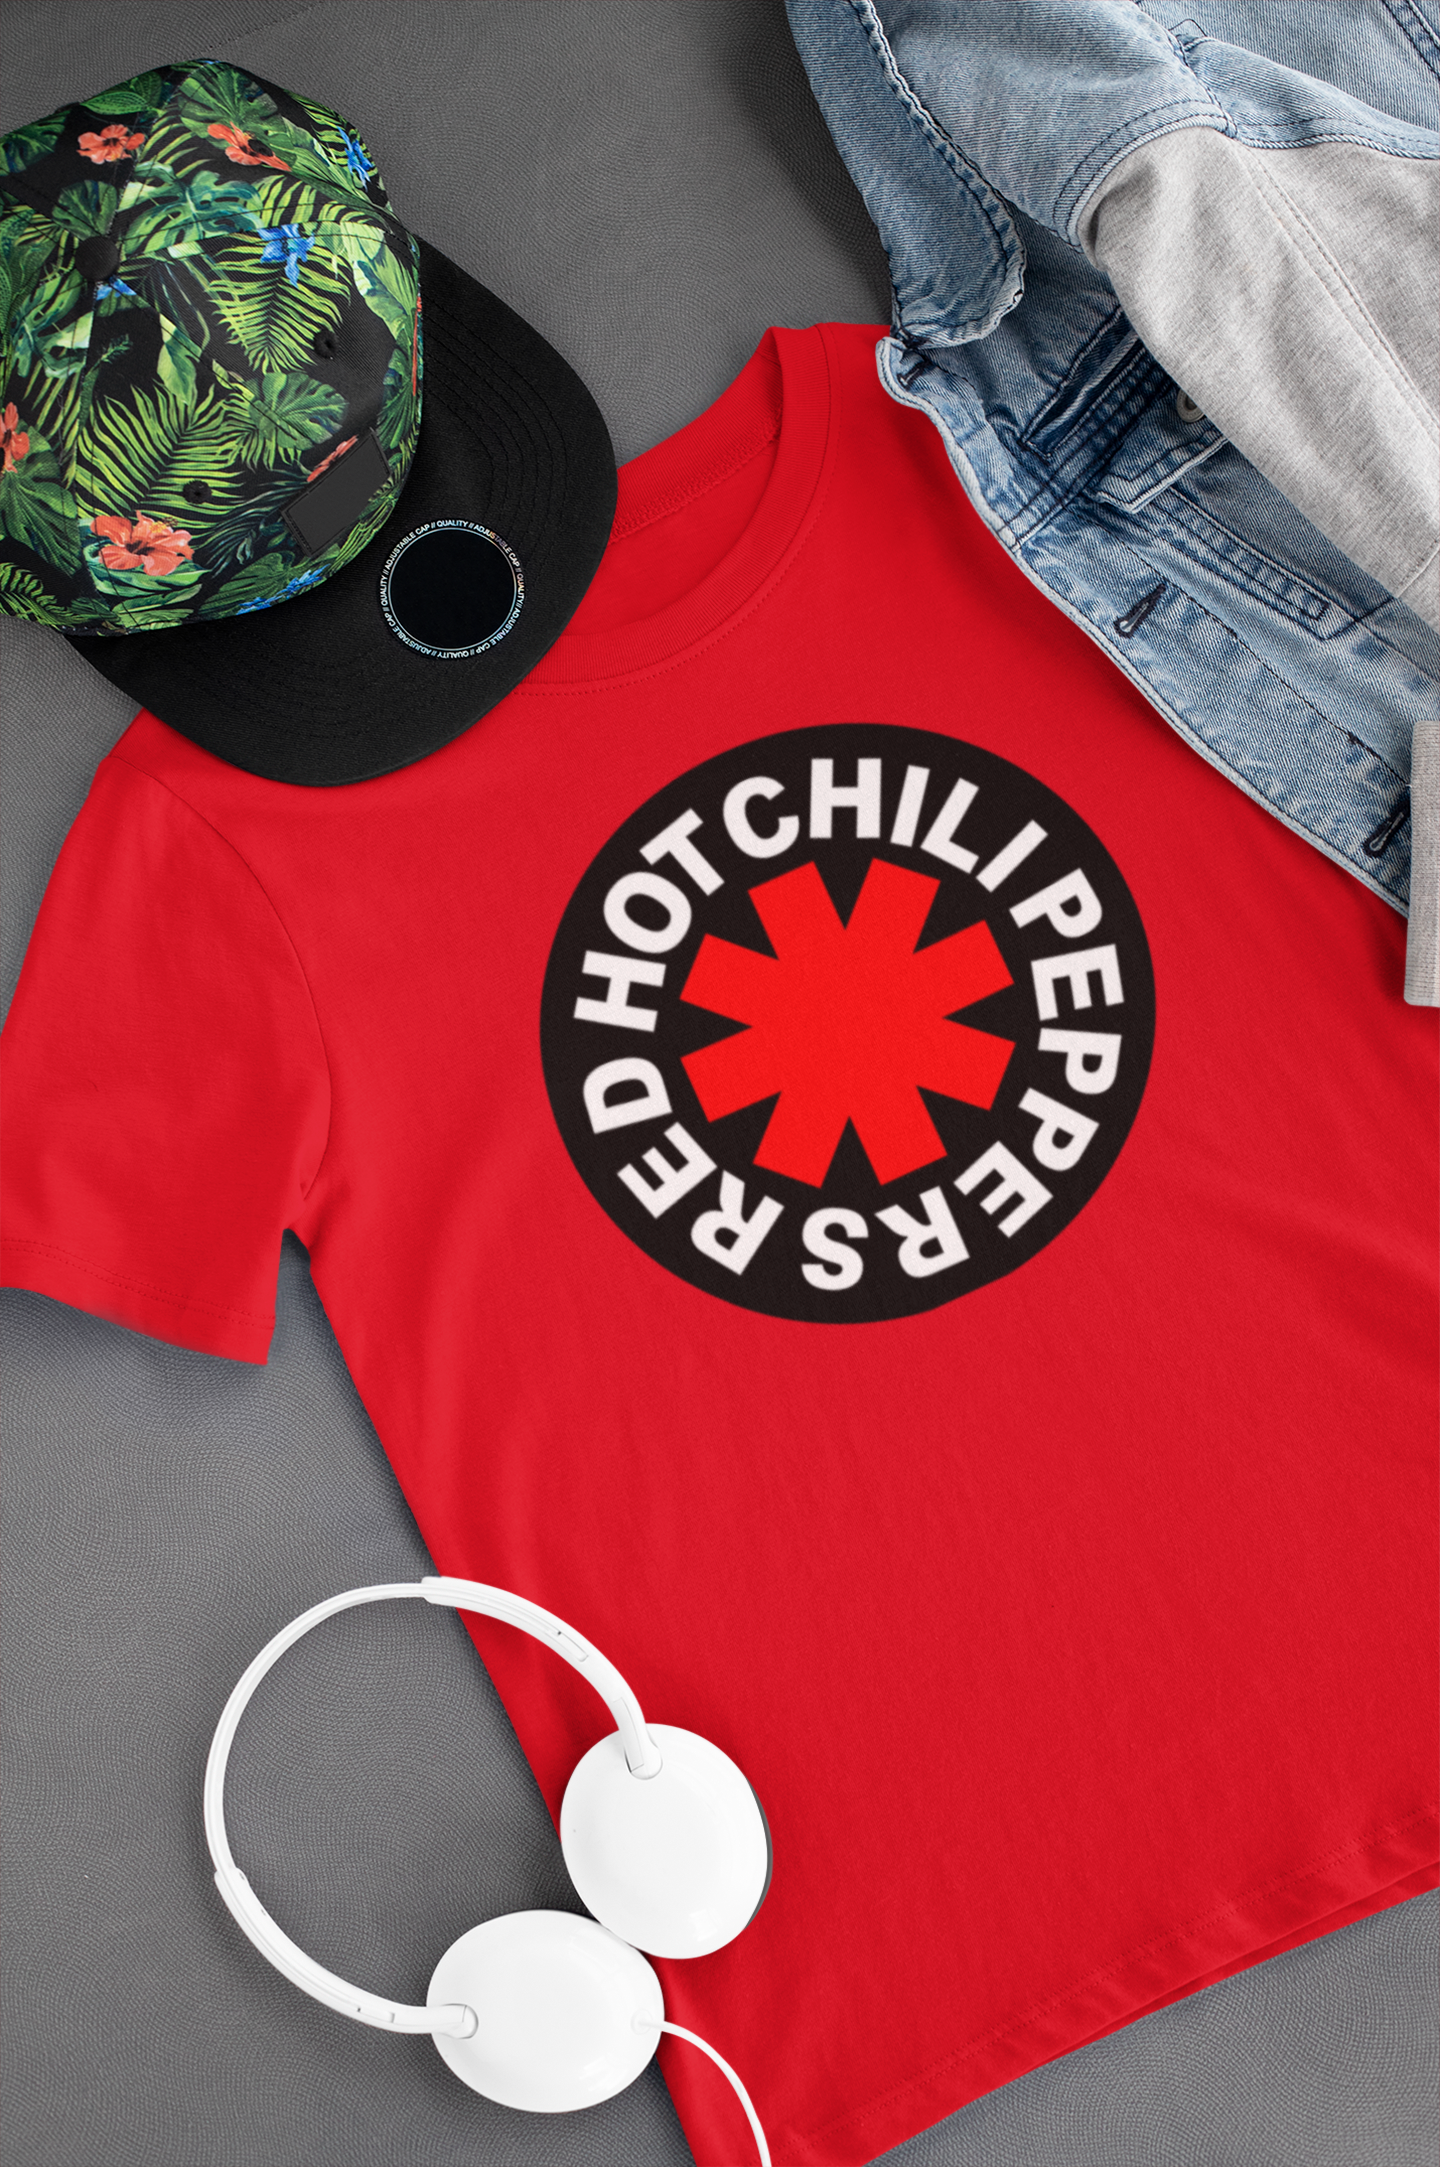 Camiseta "Red Hot Chili Peppers" Clássica - Música